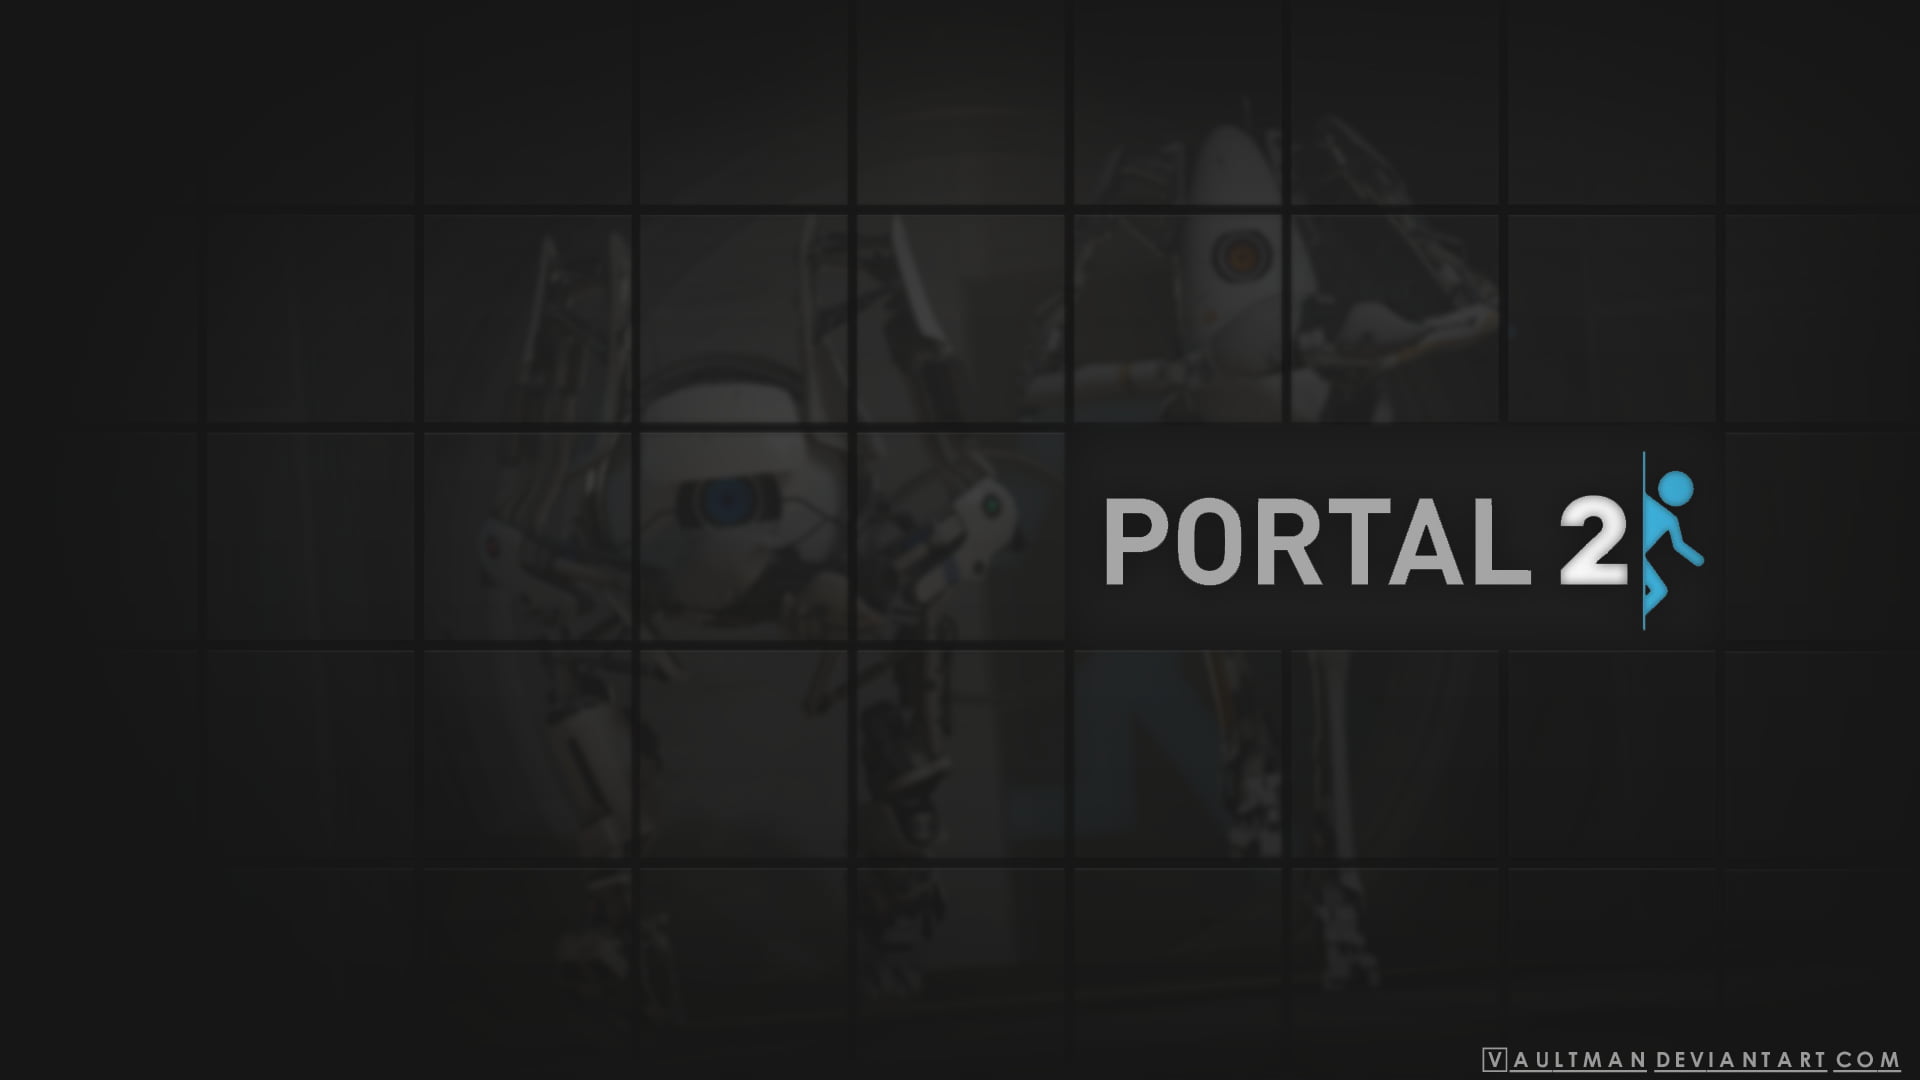 Portal 2 illustration, video games, Portal 2